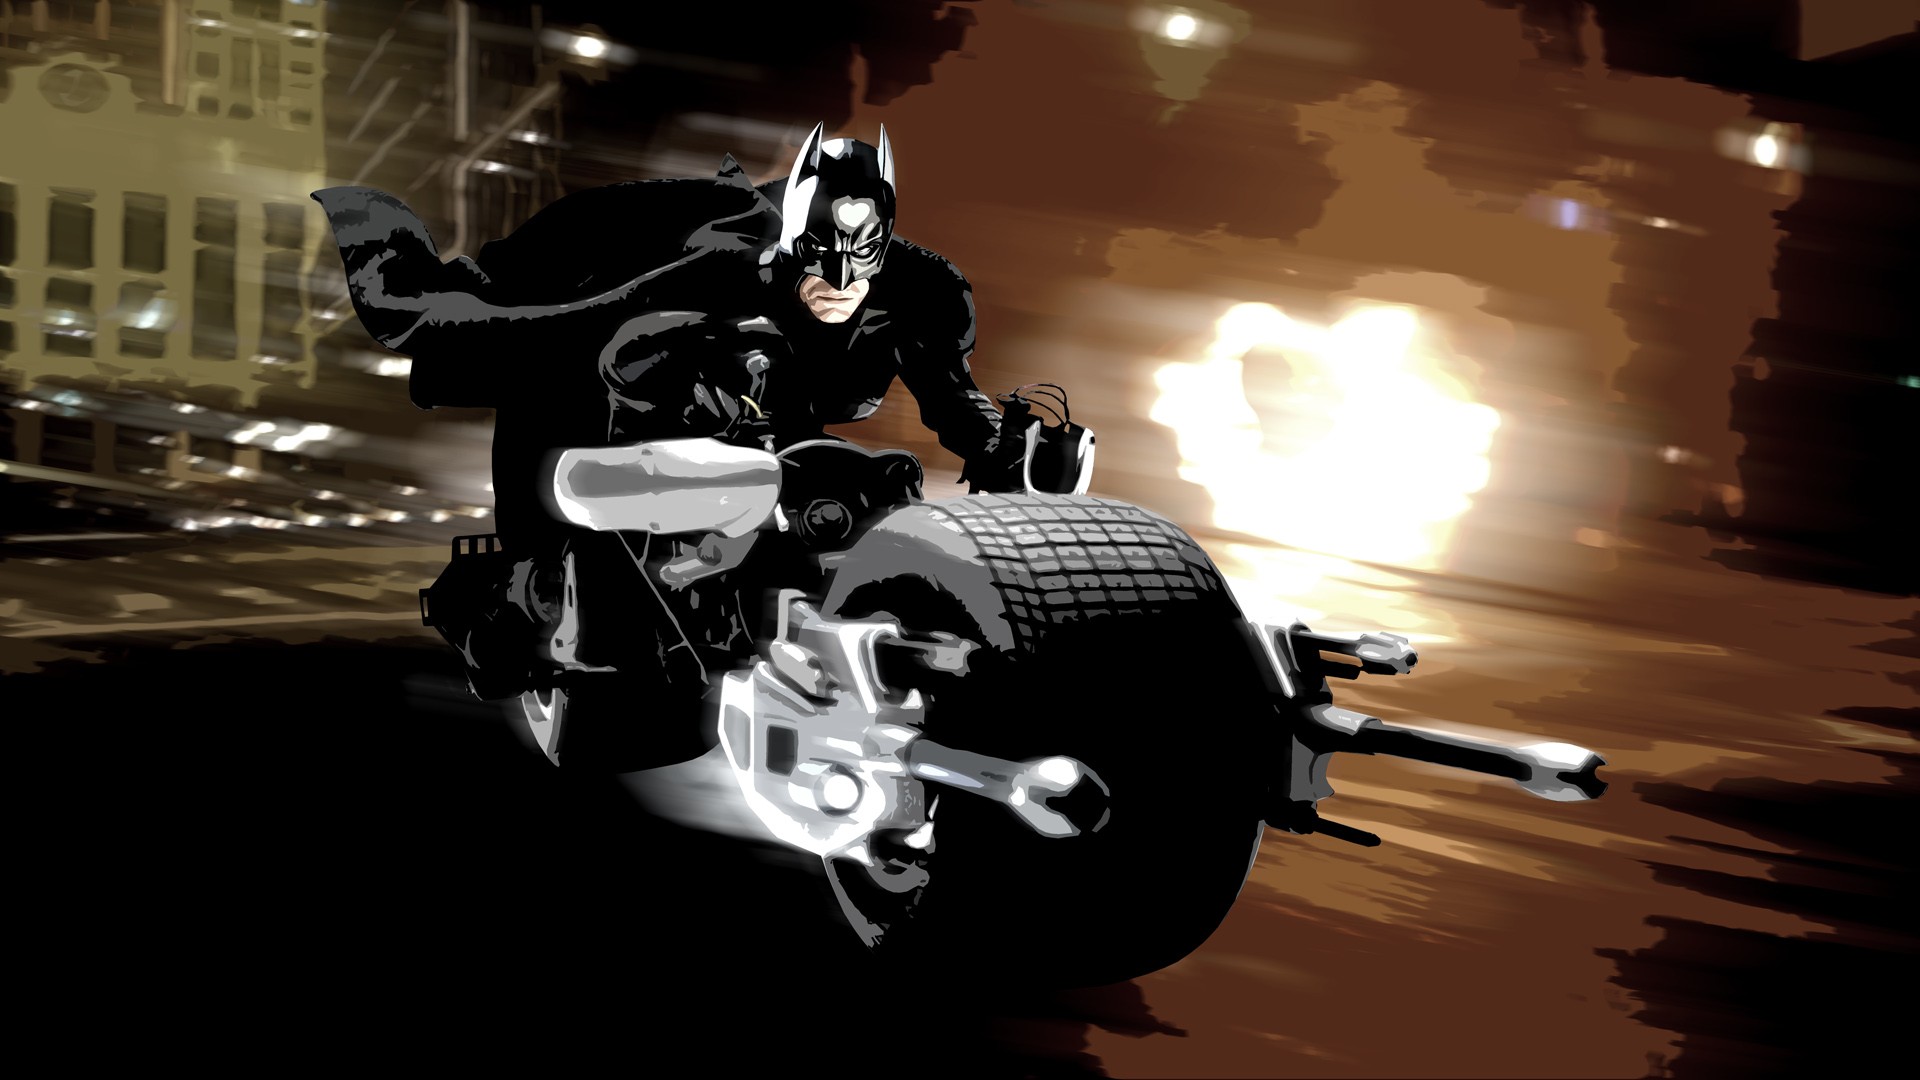 General 1920x1080 movies Batman The Dark Knight MessenjahMatt vehicle artwork Christian Bale superhero DC Comics Warner Brothers Christopher Nolan